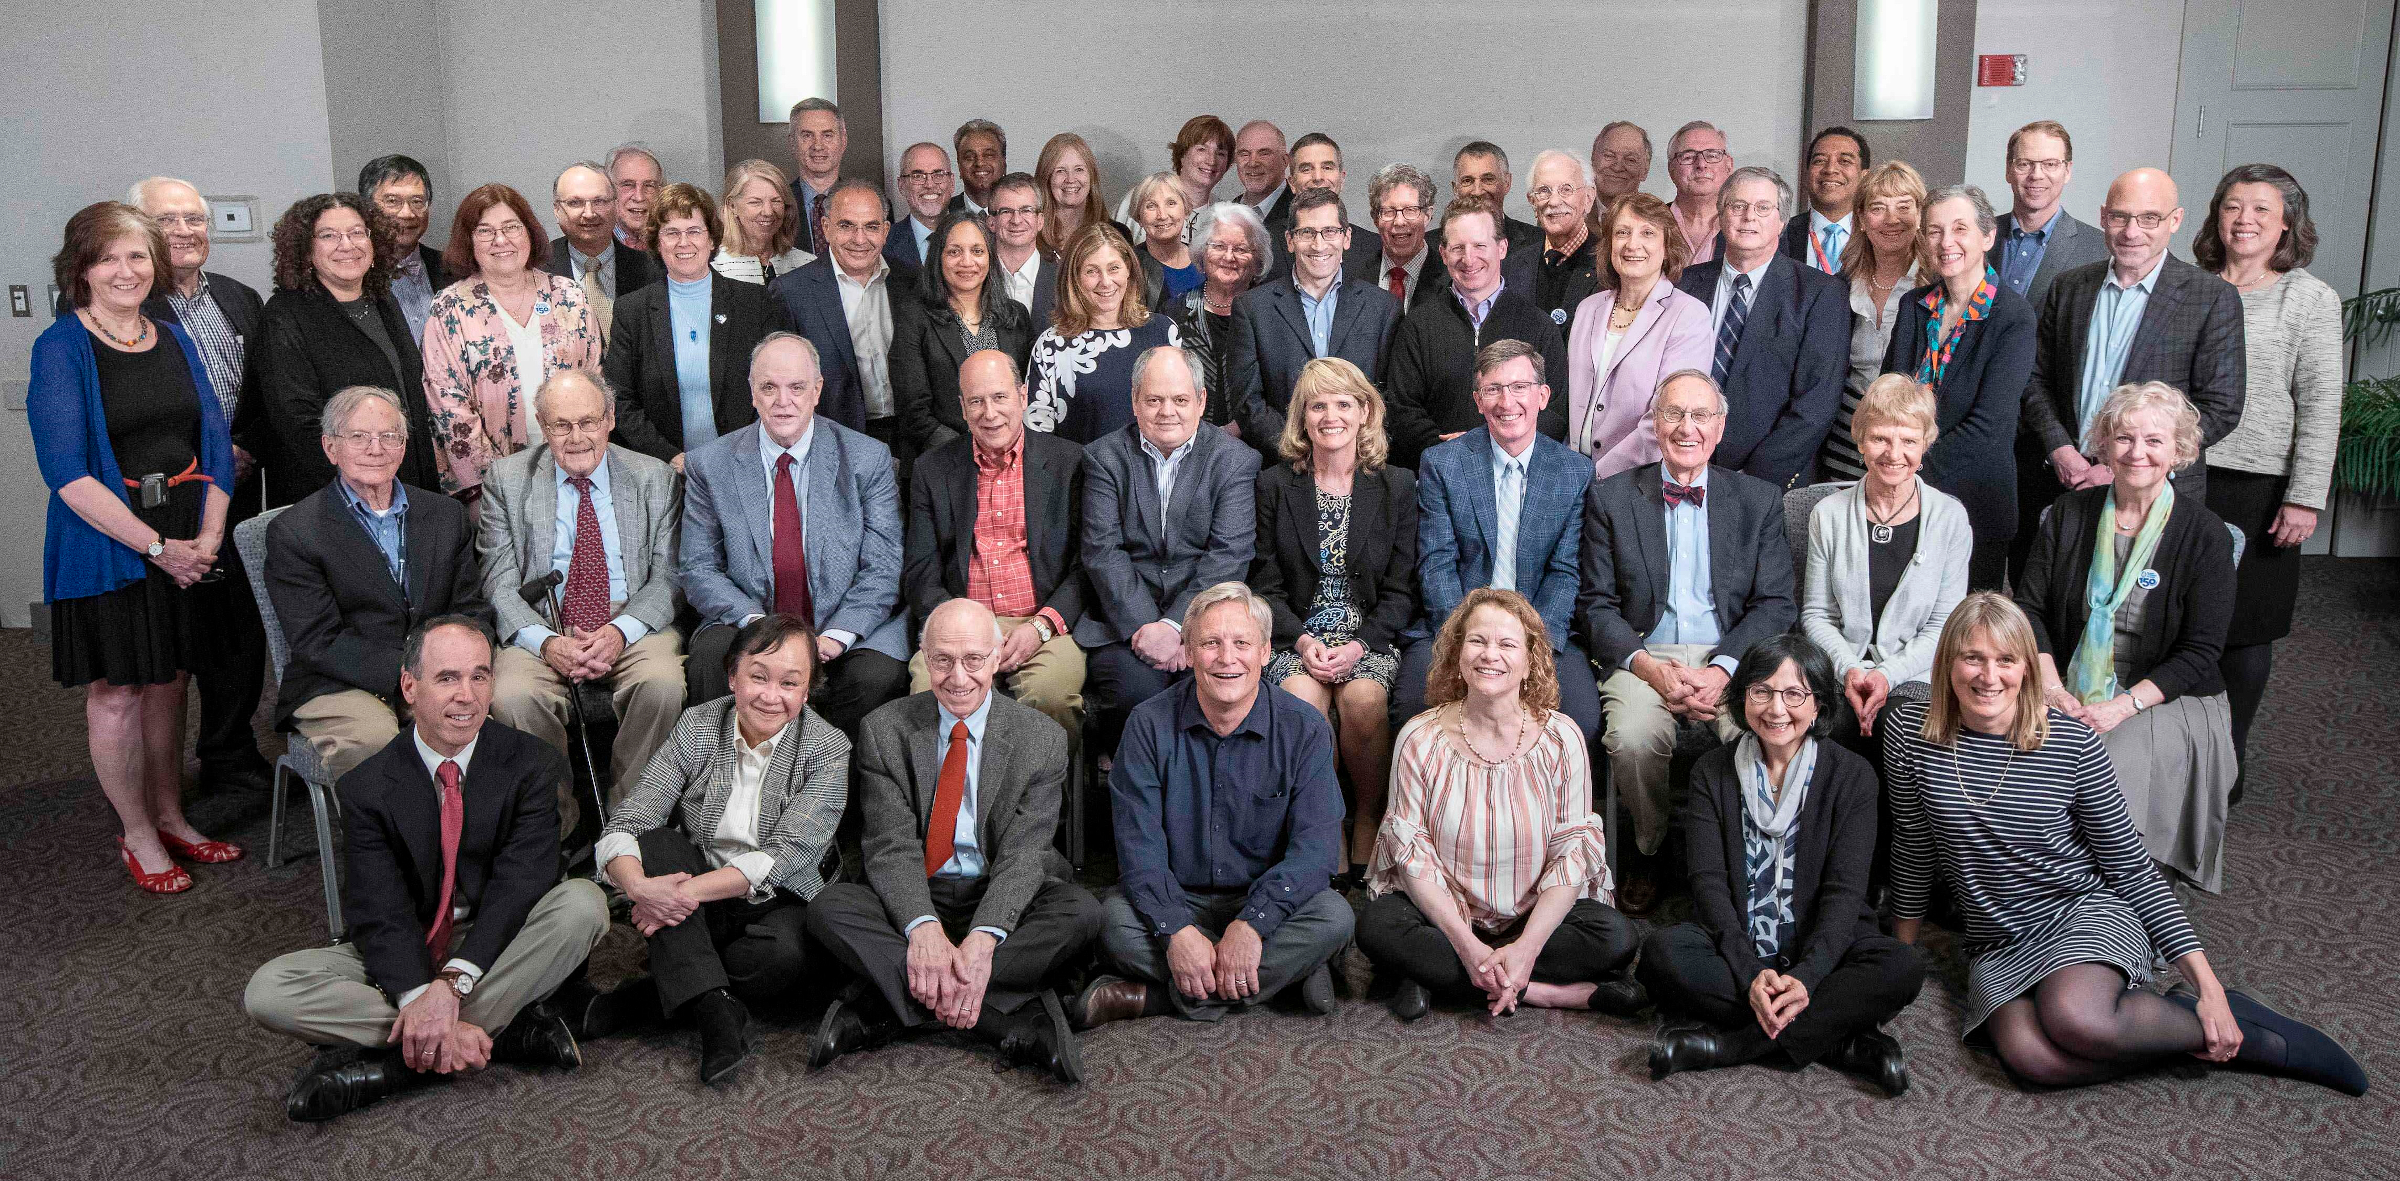 Members of the Boston Children's Hospital Alumni Association